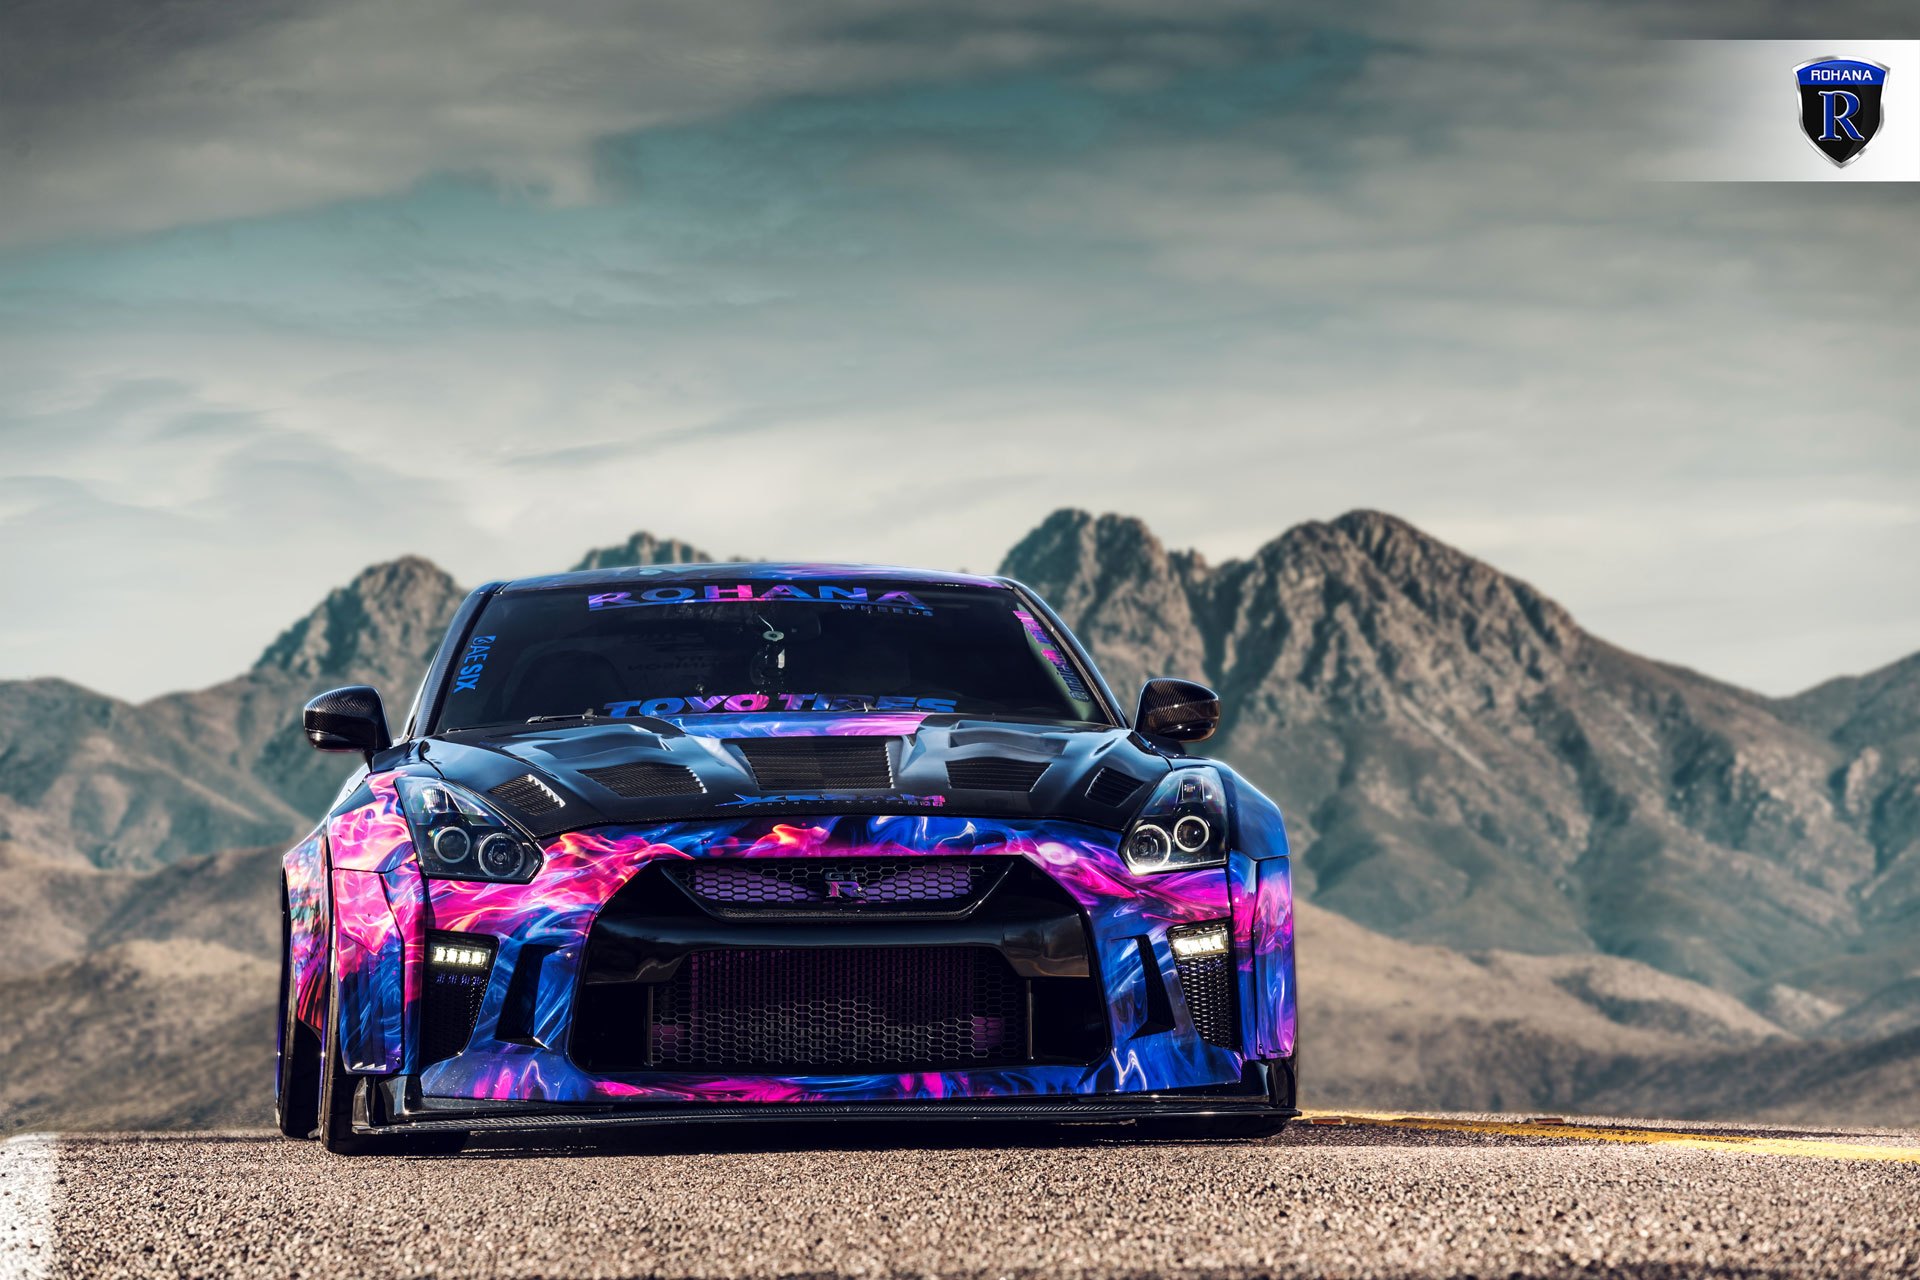 Dark Smoke Halo Headlights on Custom Painted Nissan GT-R - Photo by Rohana Wheels